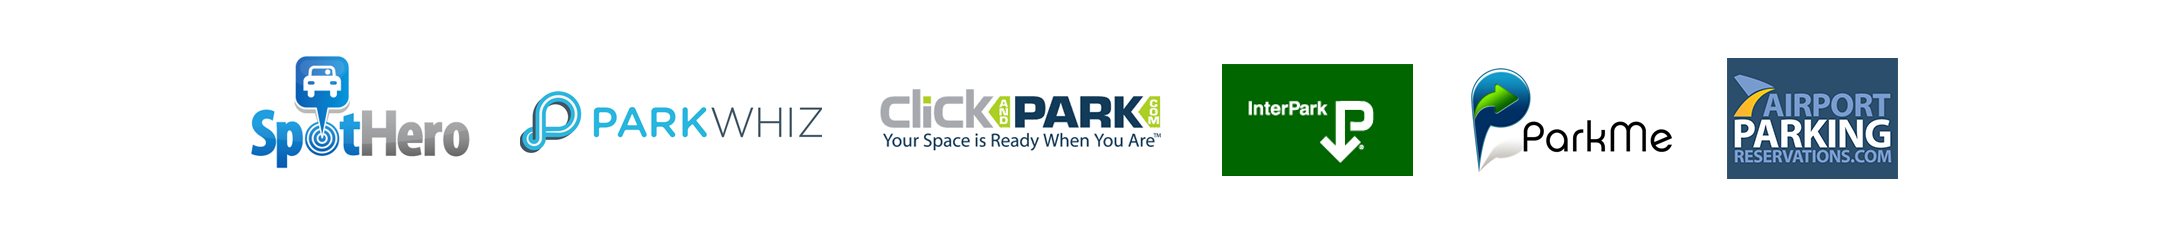 Parkonect, SpotHero, ParkWhiz, ClickAndPark.com, InterPark, ParkMe, AirportParkingReservations.com